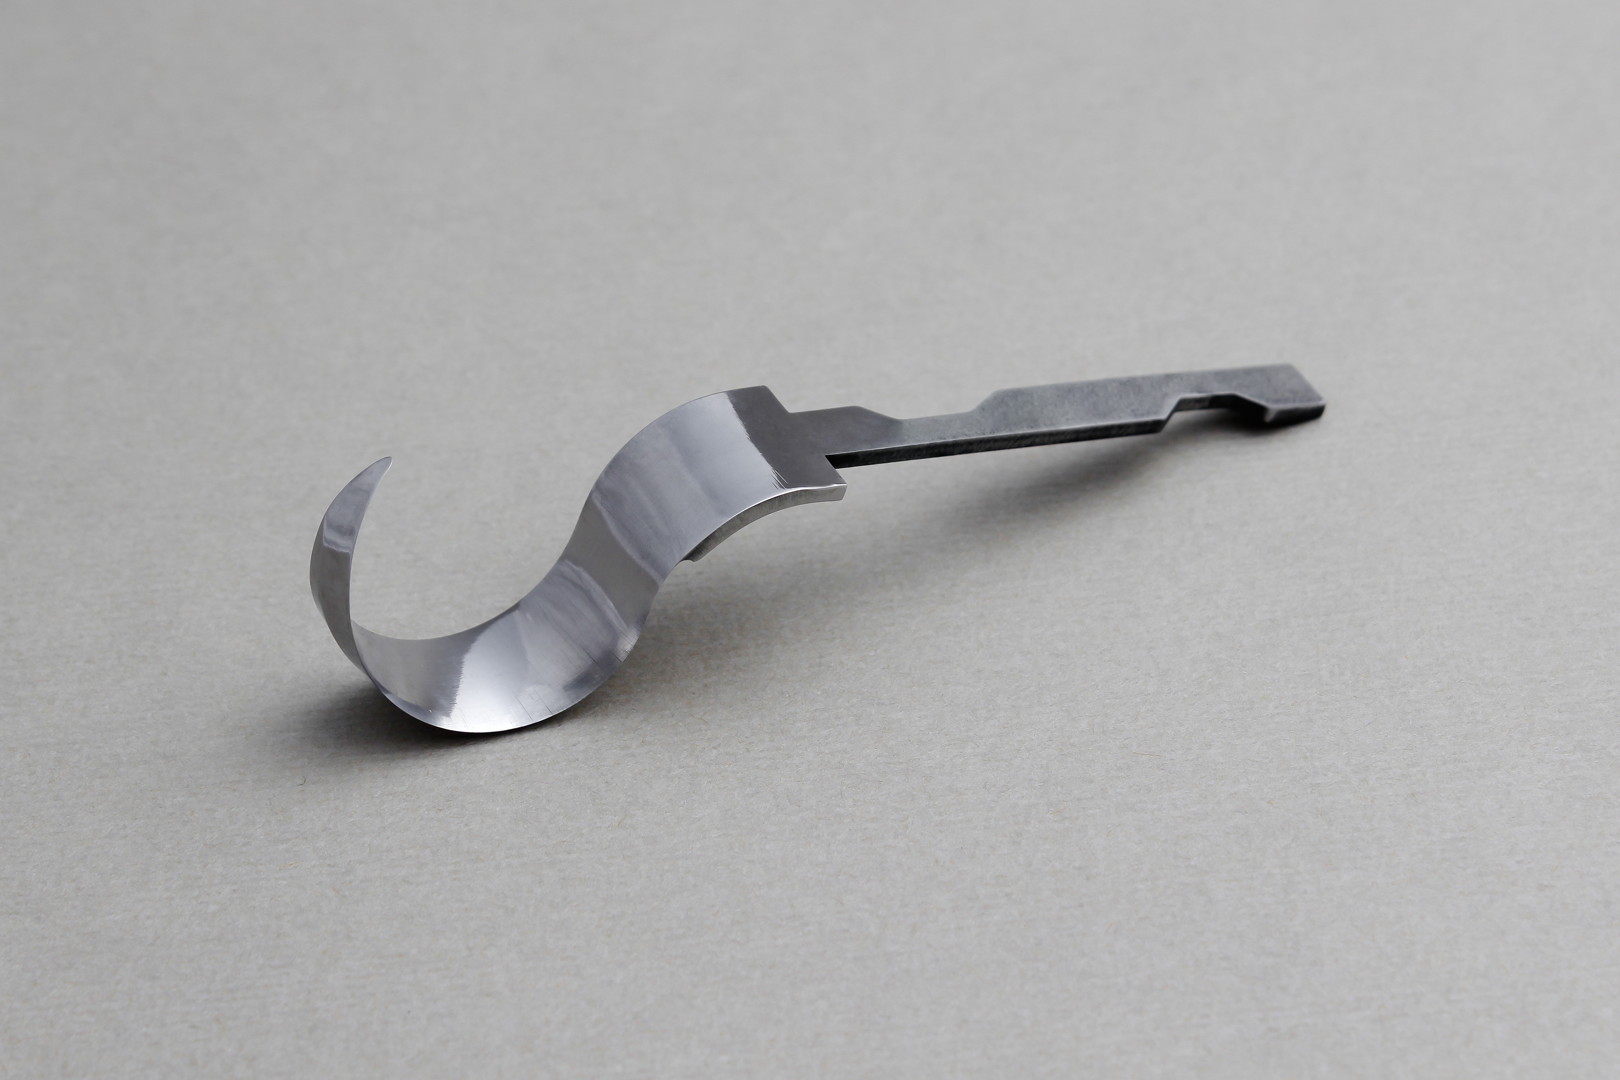 BeaverCraft Spoon Carving Knife 25 mm BSK1 čepel